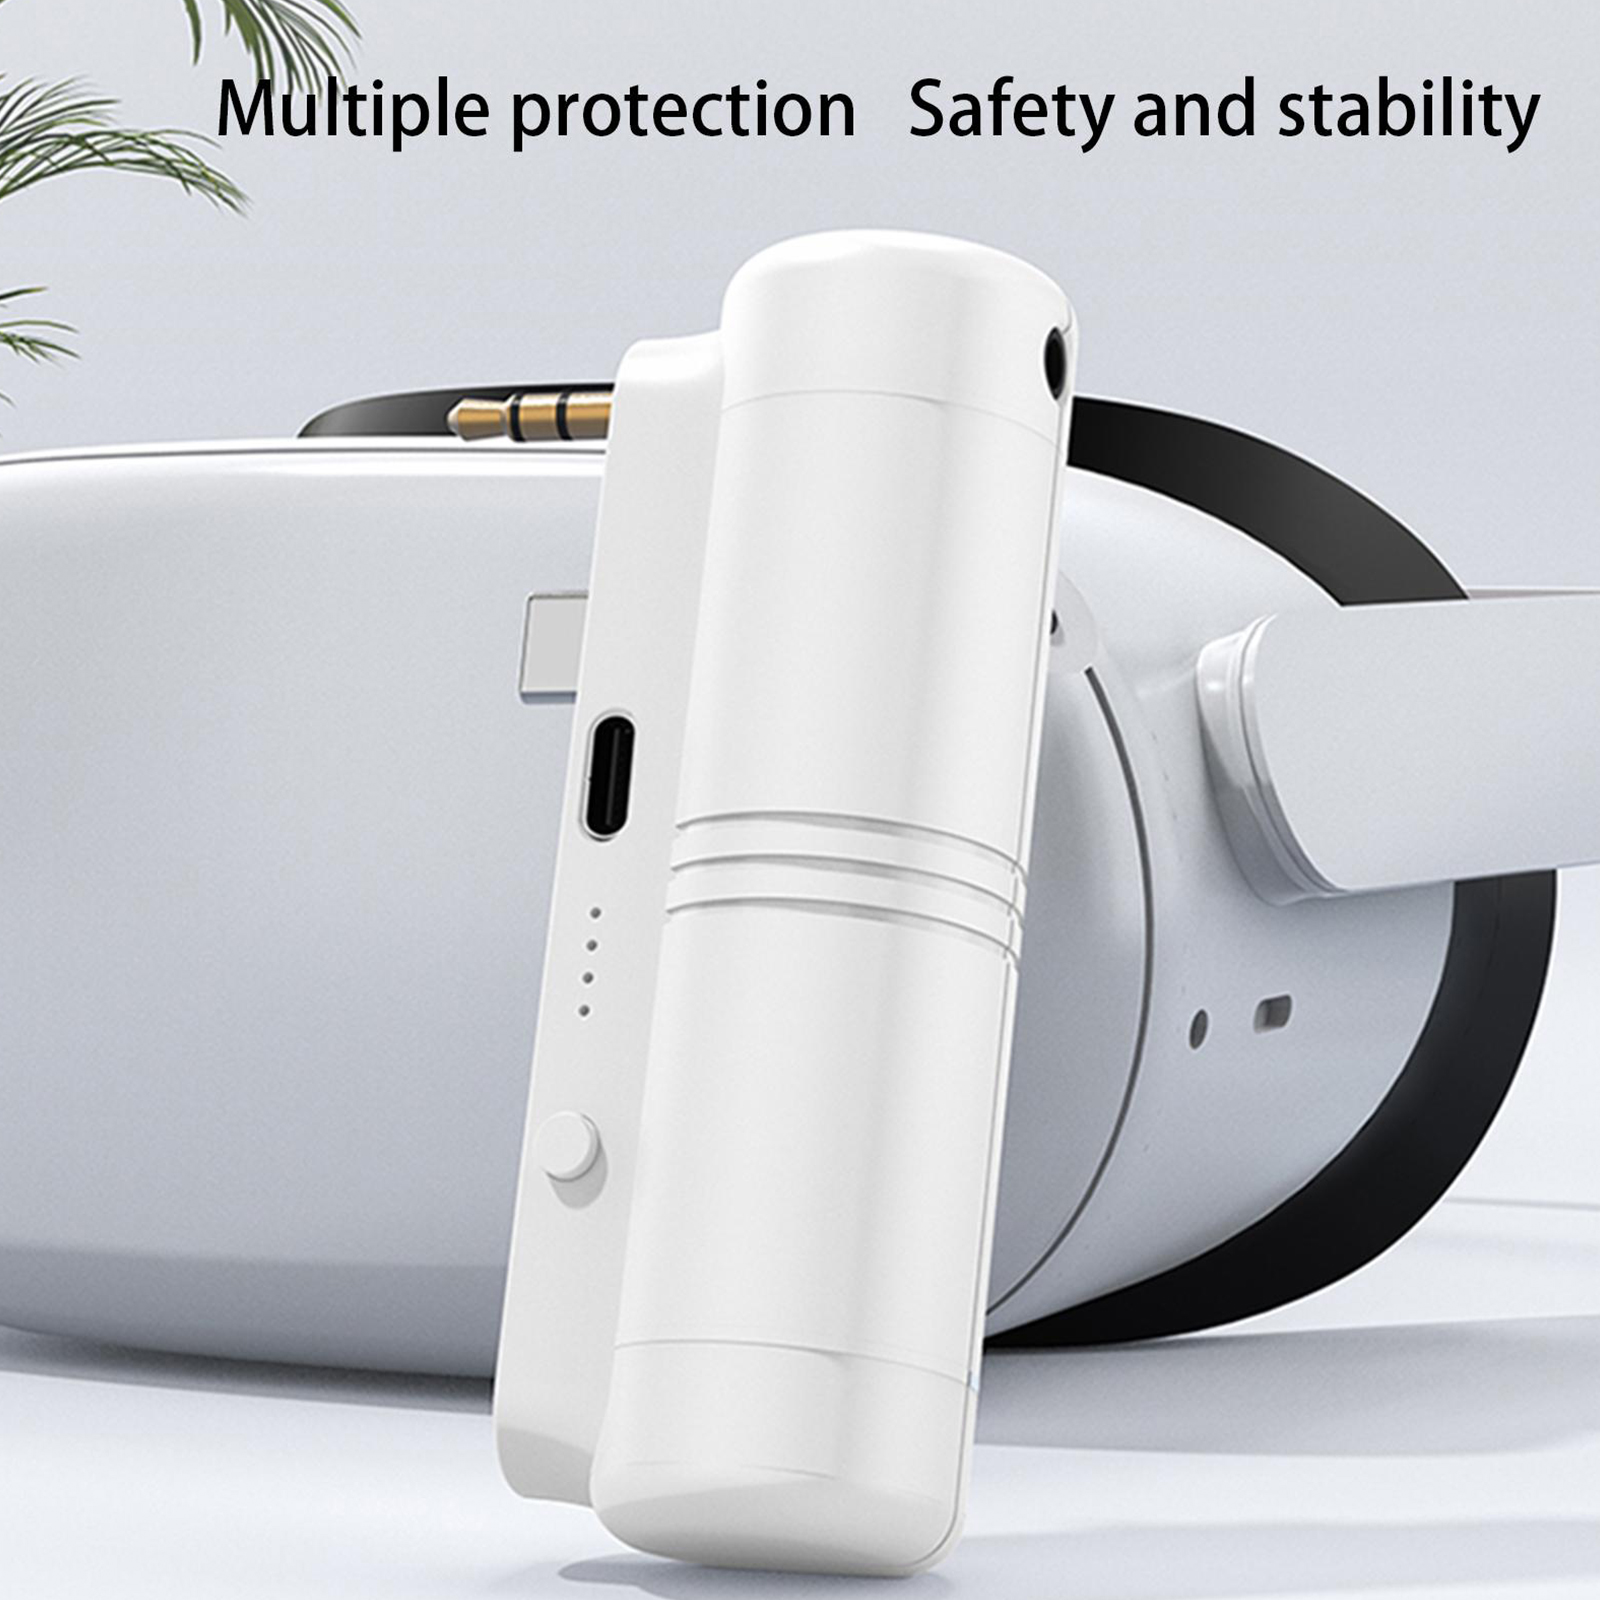 VR オーディオ ヘッドホン アダプター プロフェッショナル 4800mah ポータブル パワー バンク 緊急充電器 Oculus Quest 2 と互換性あり